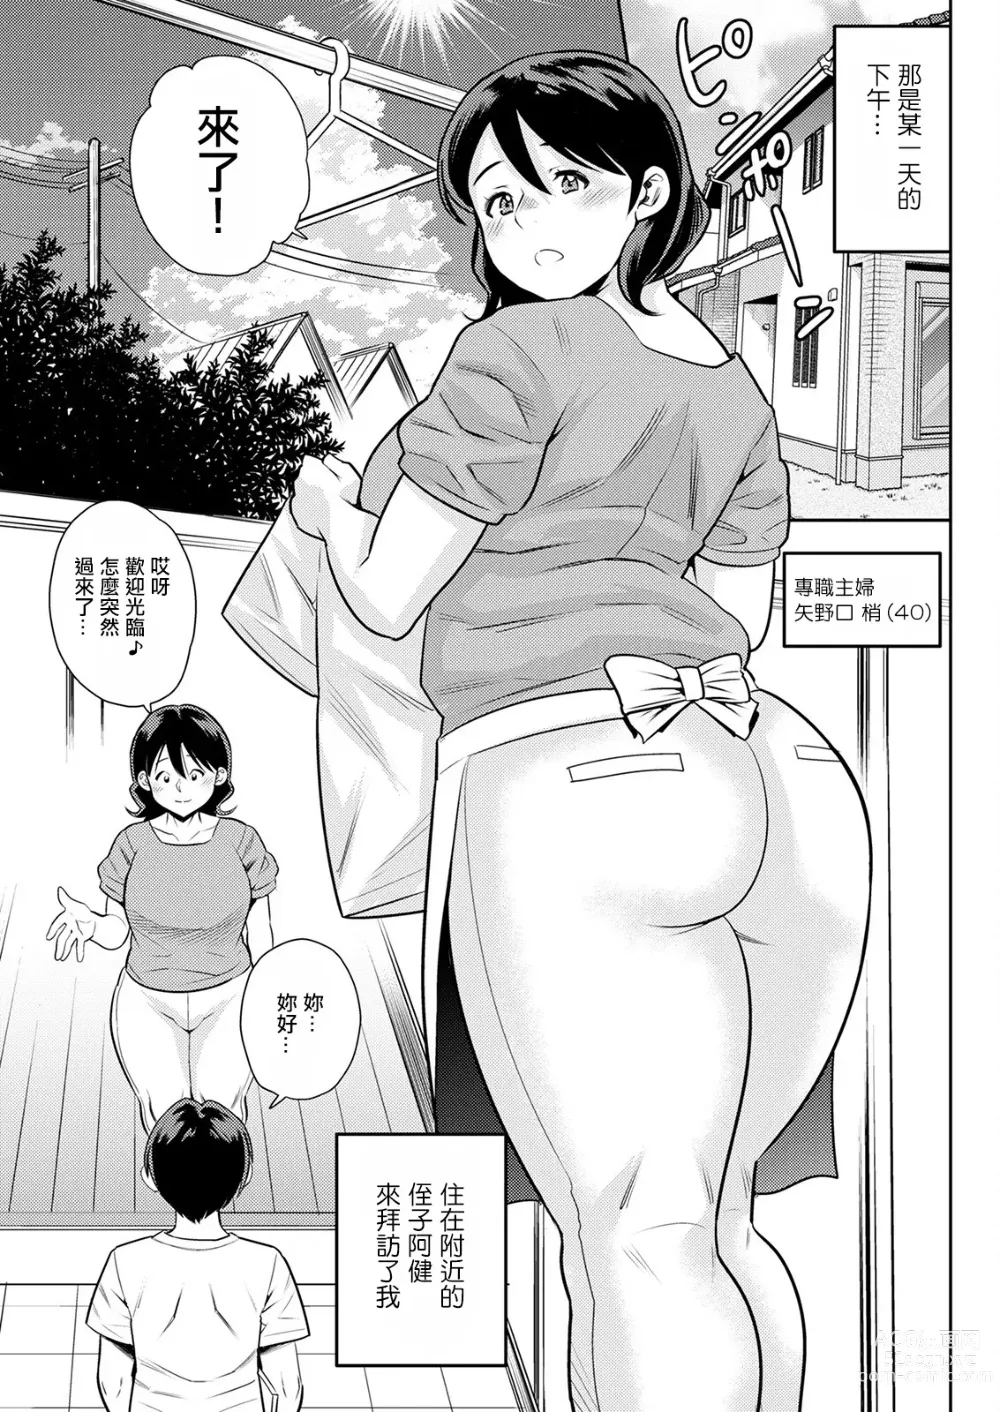 Page 1 of manga Iiwake